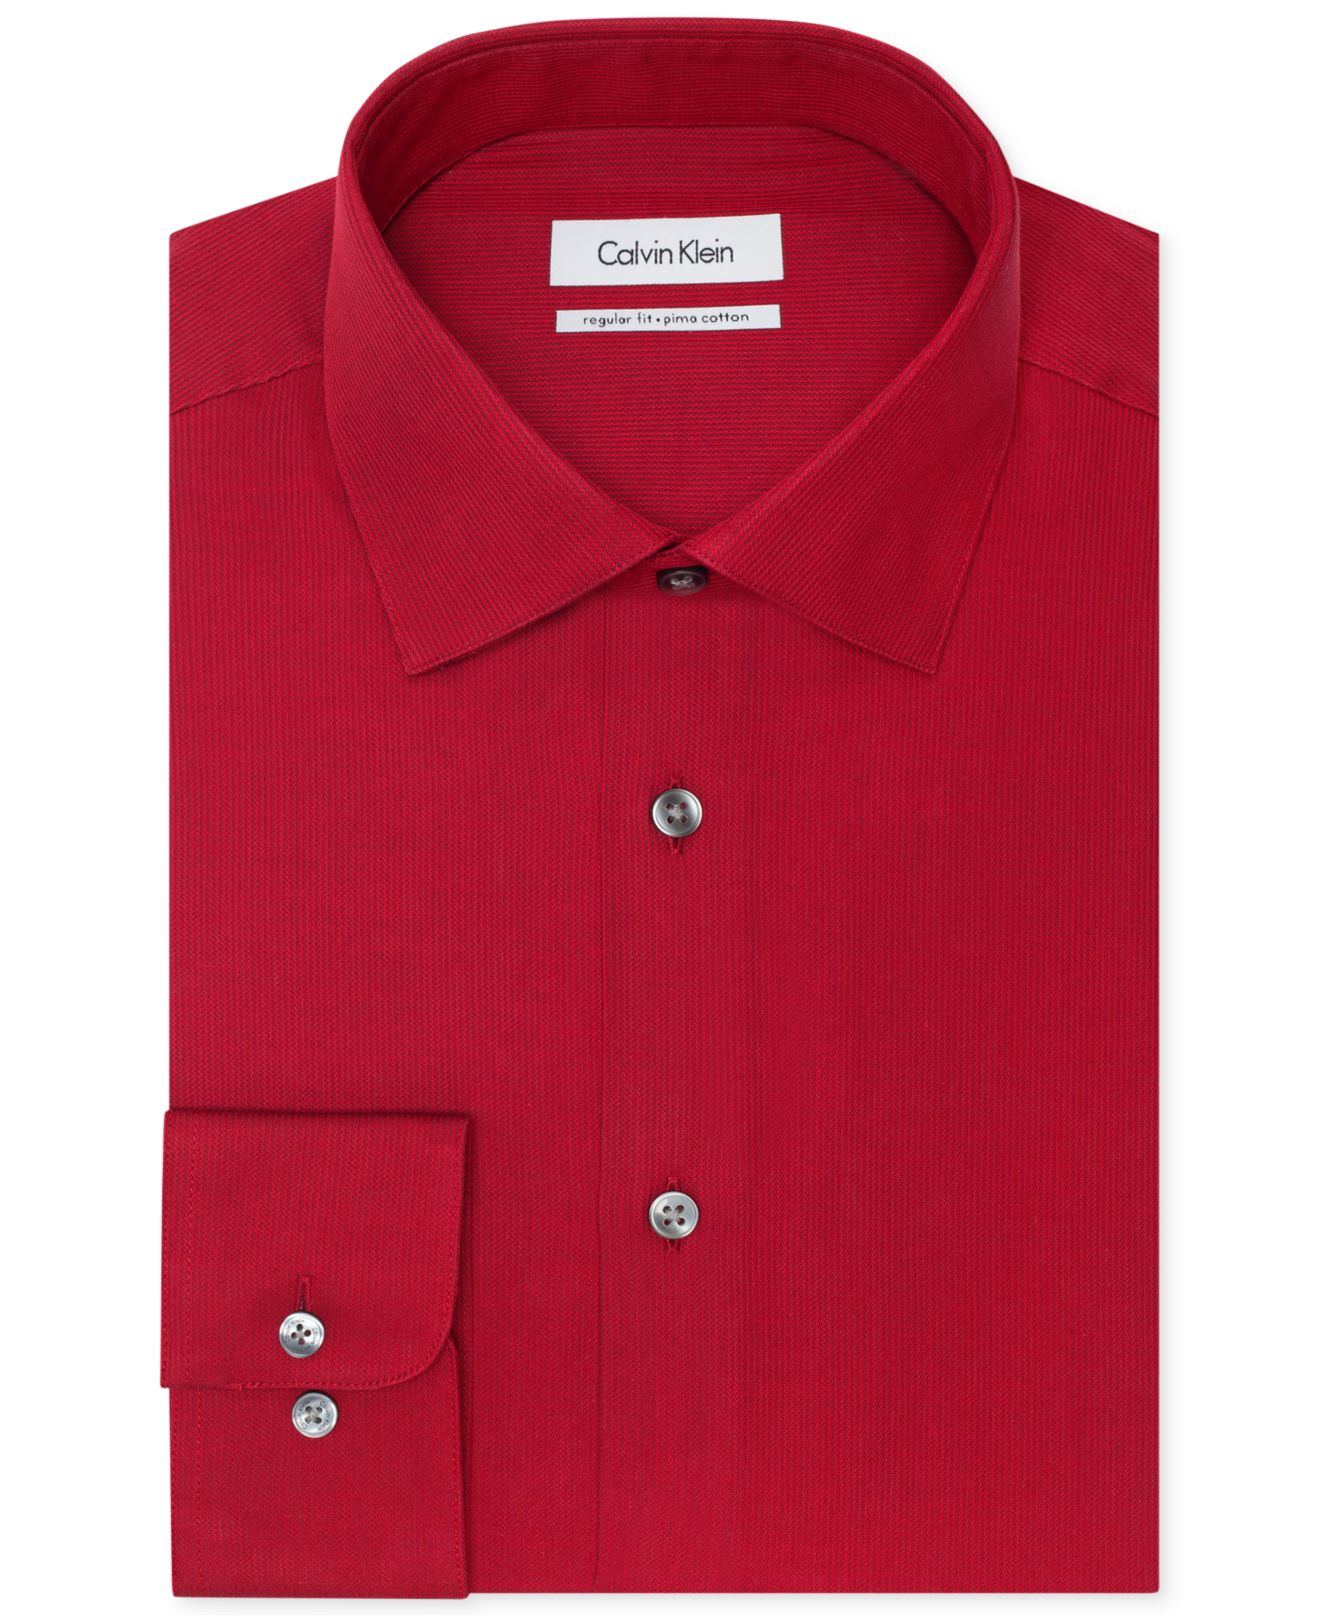 Calvin Klein Red Clay Tonal Striped Dress Shirt for Men - Lyst